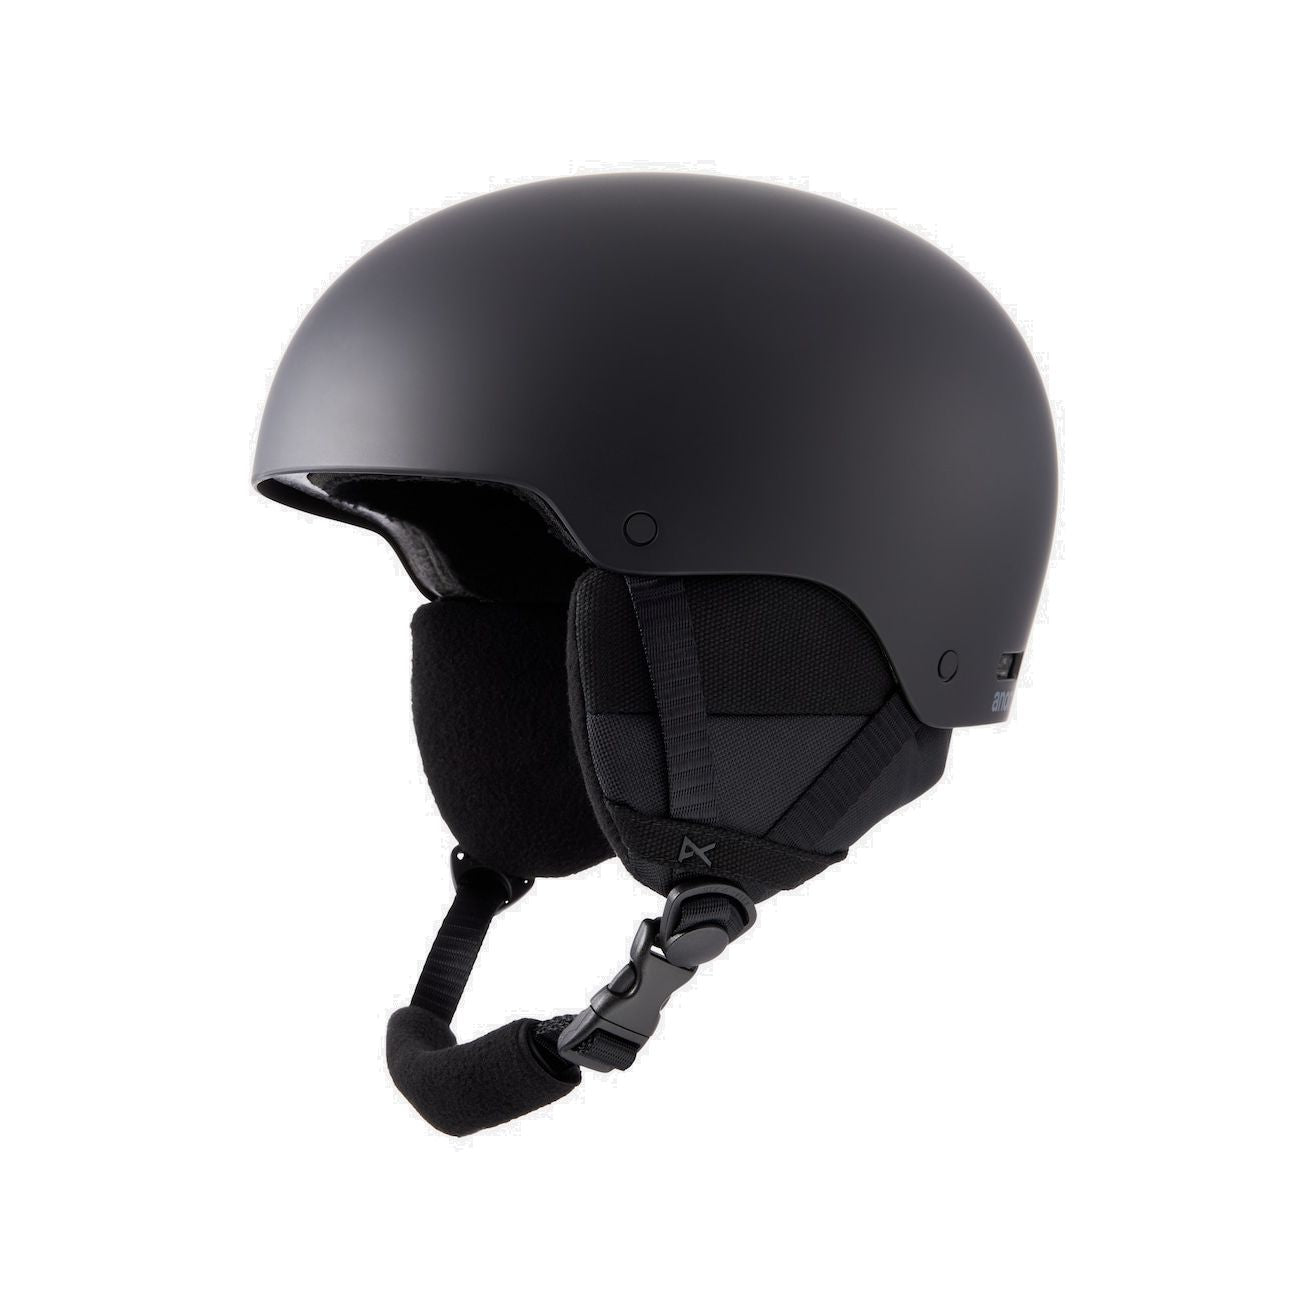 Anon Raider 3 Helmet - Round Fit Black Snow Helmets